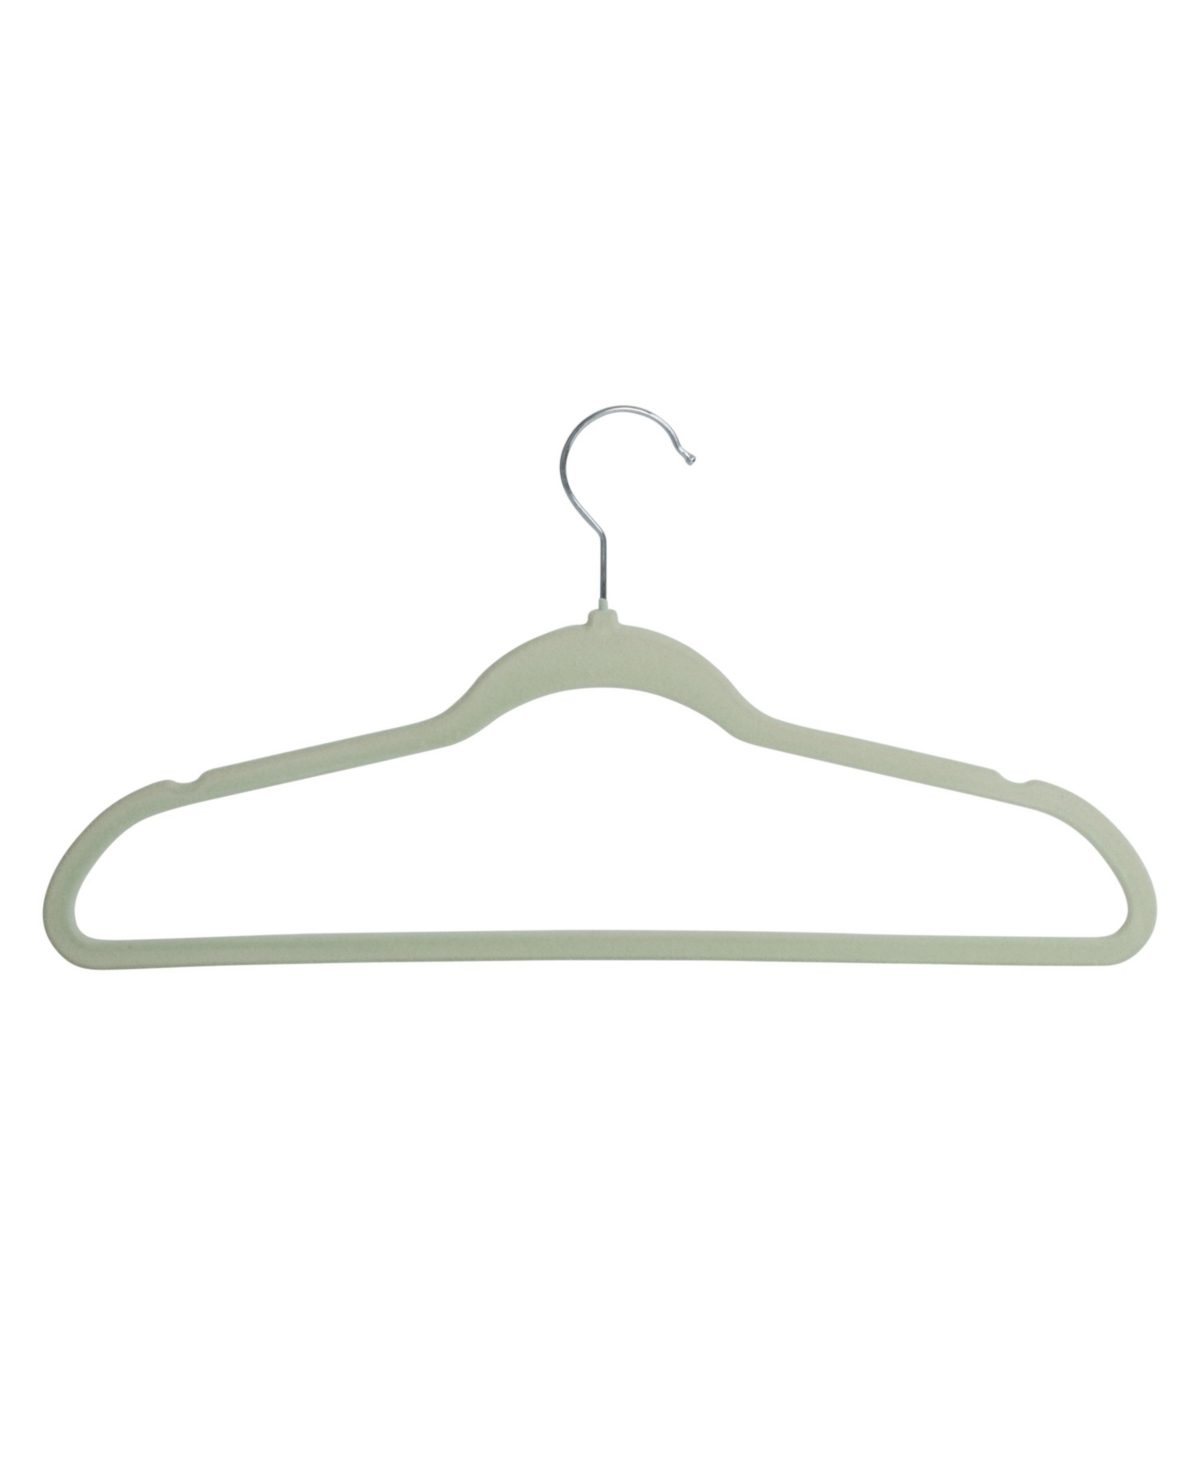 Slim-Profile Non-Slip Velvet Hangers Set, 35 Pieces - Green